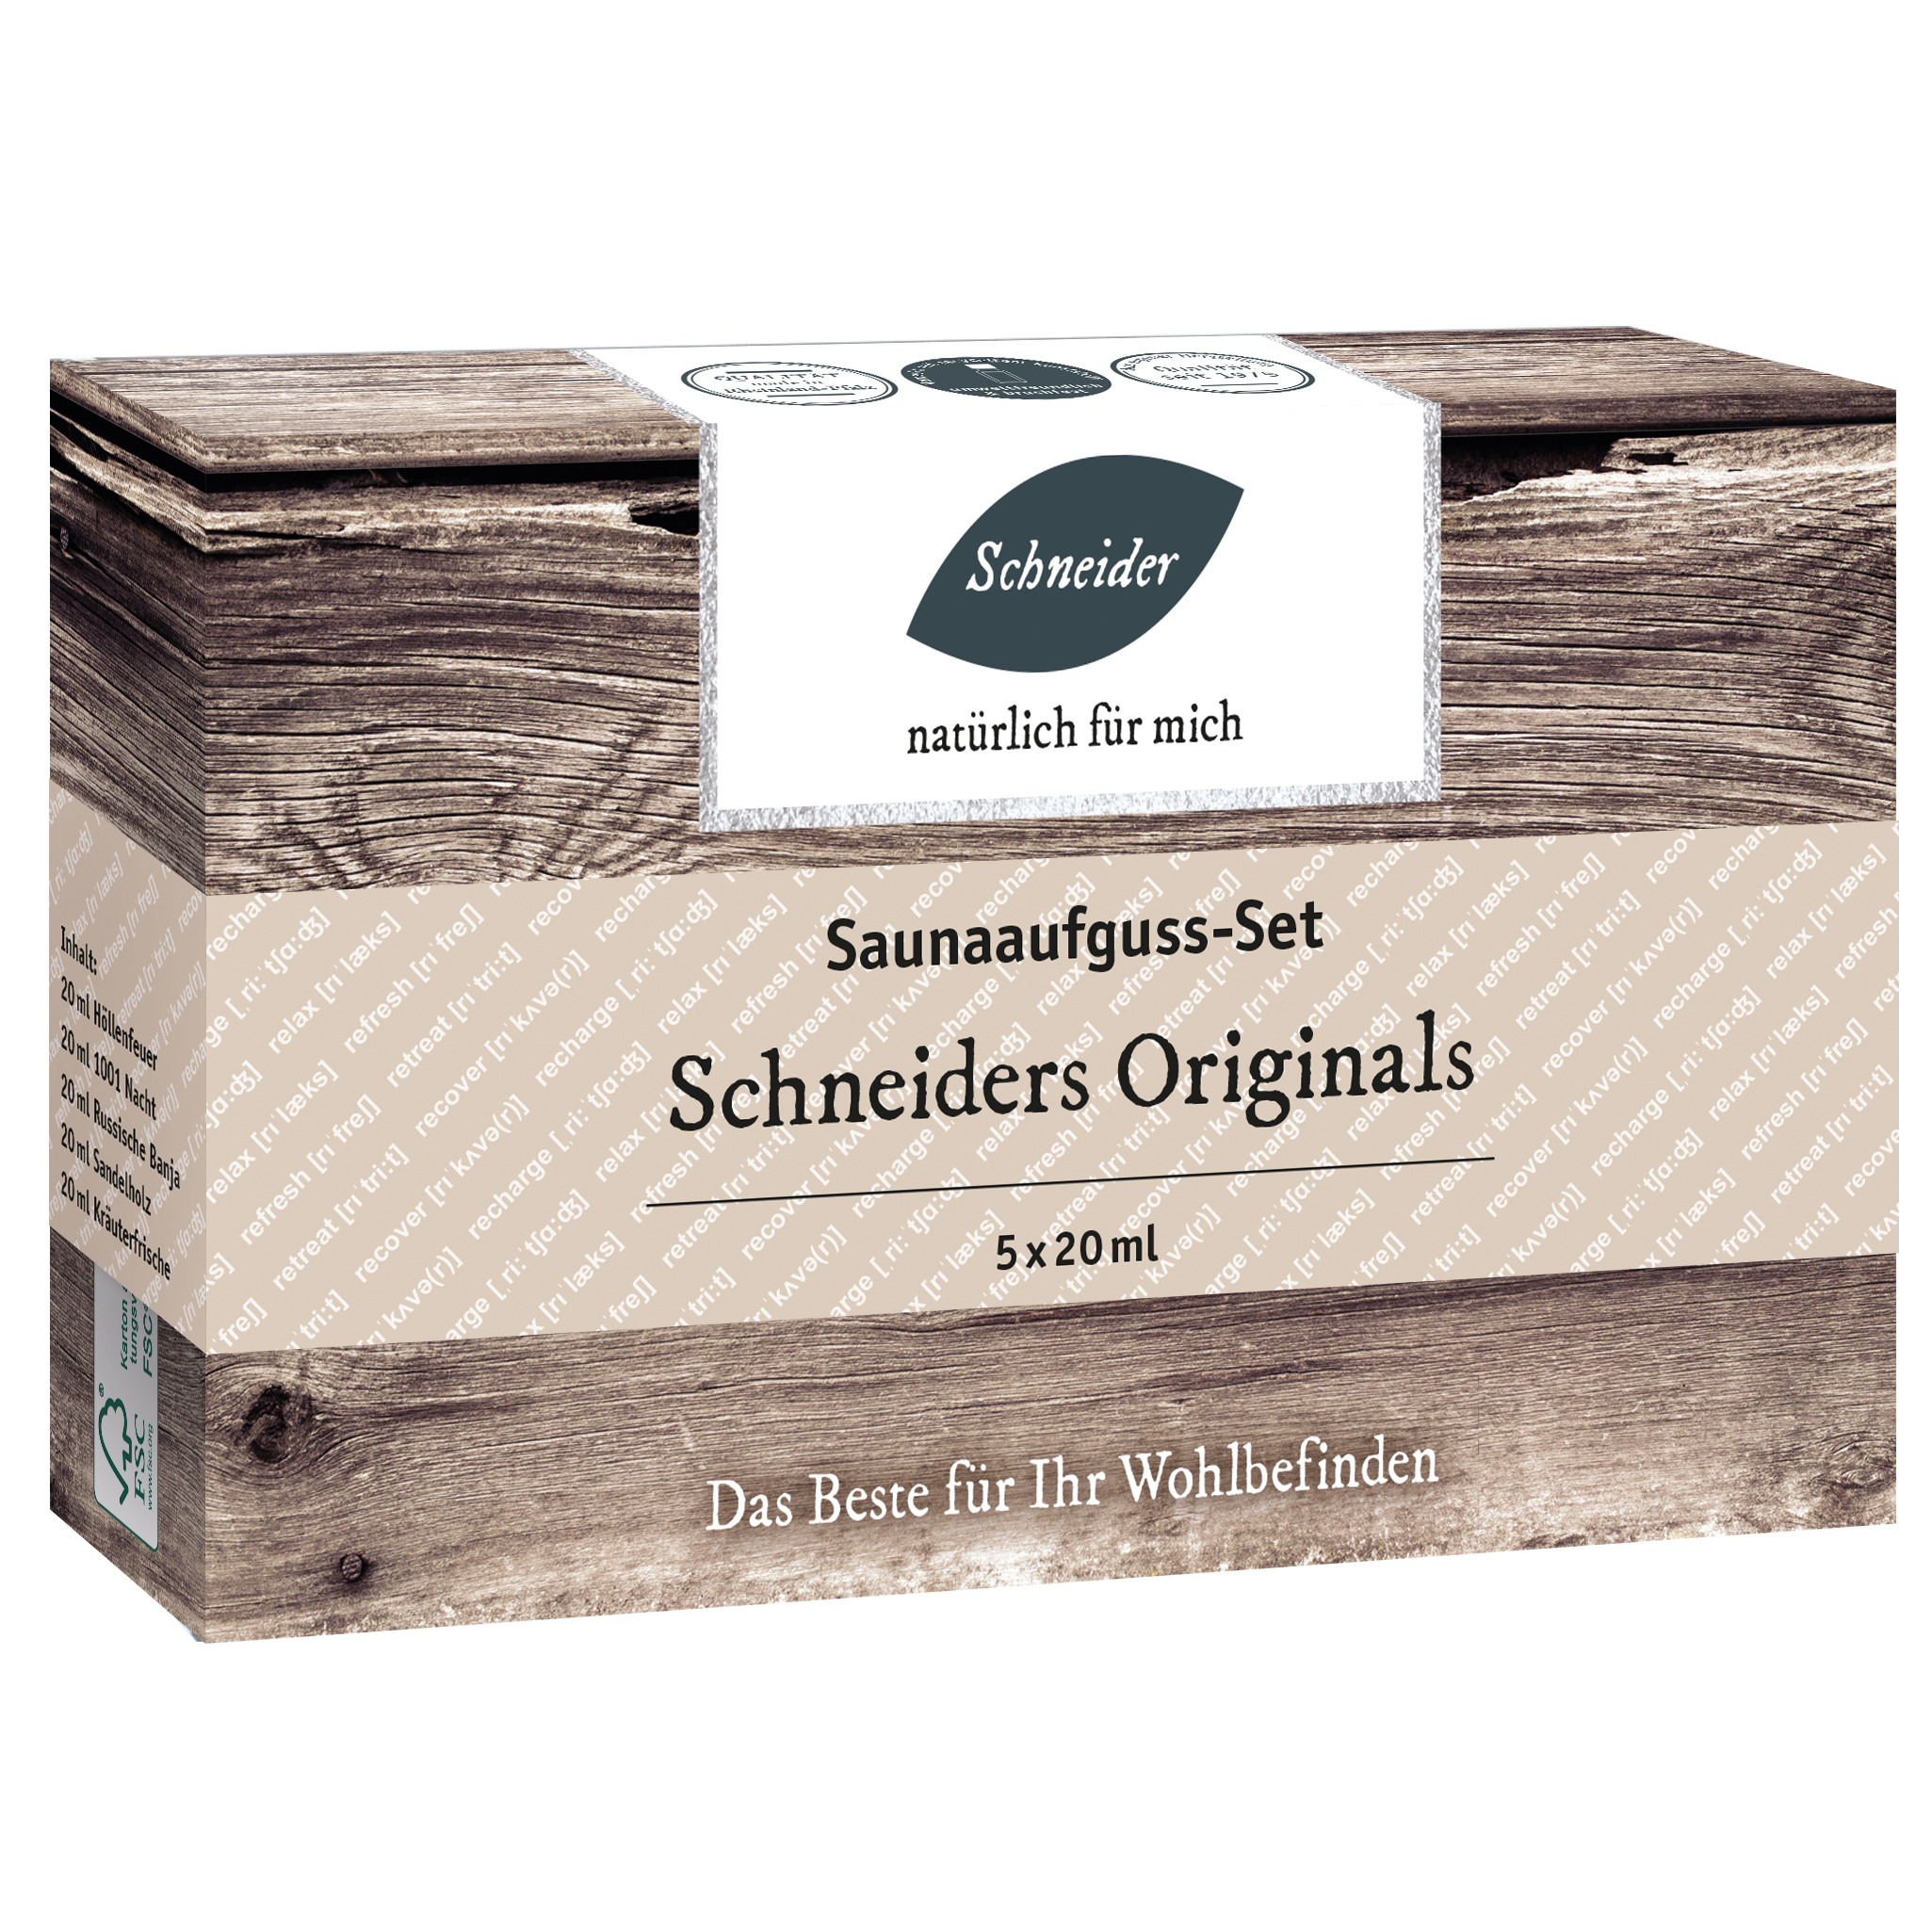 Saunaaufguss-Set - Schneiders Originals